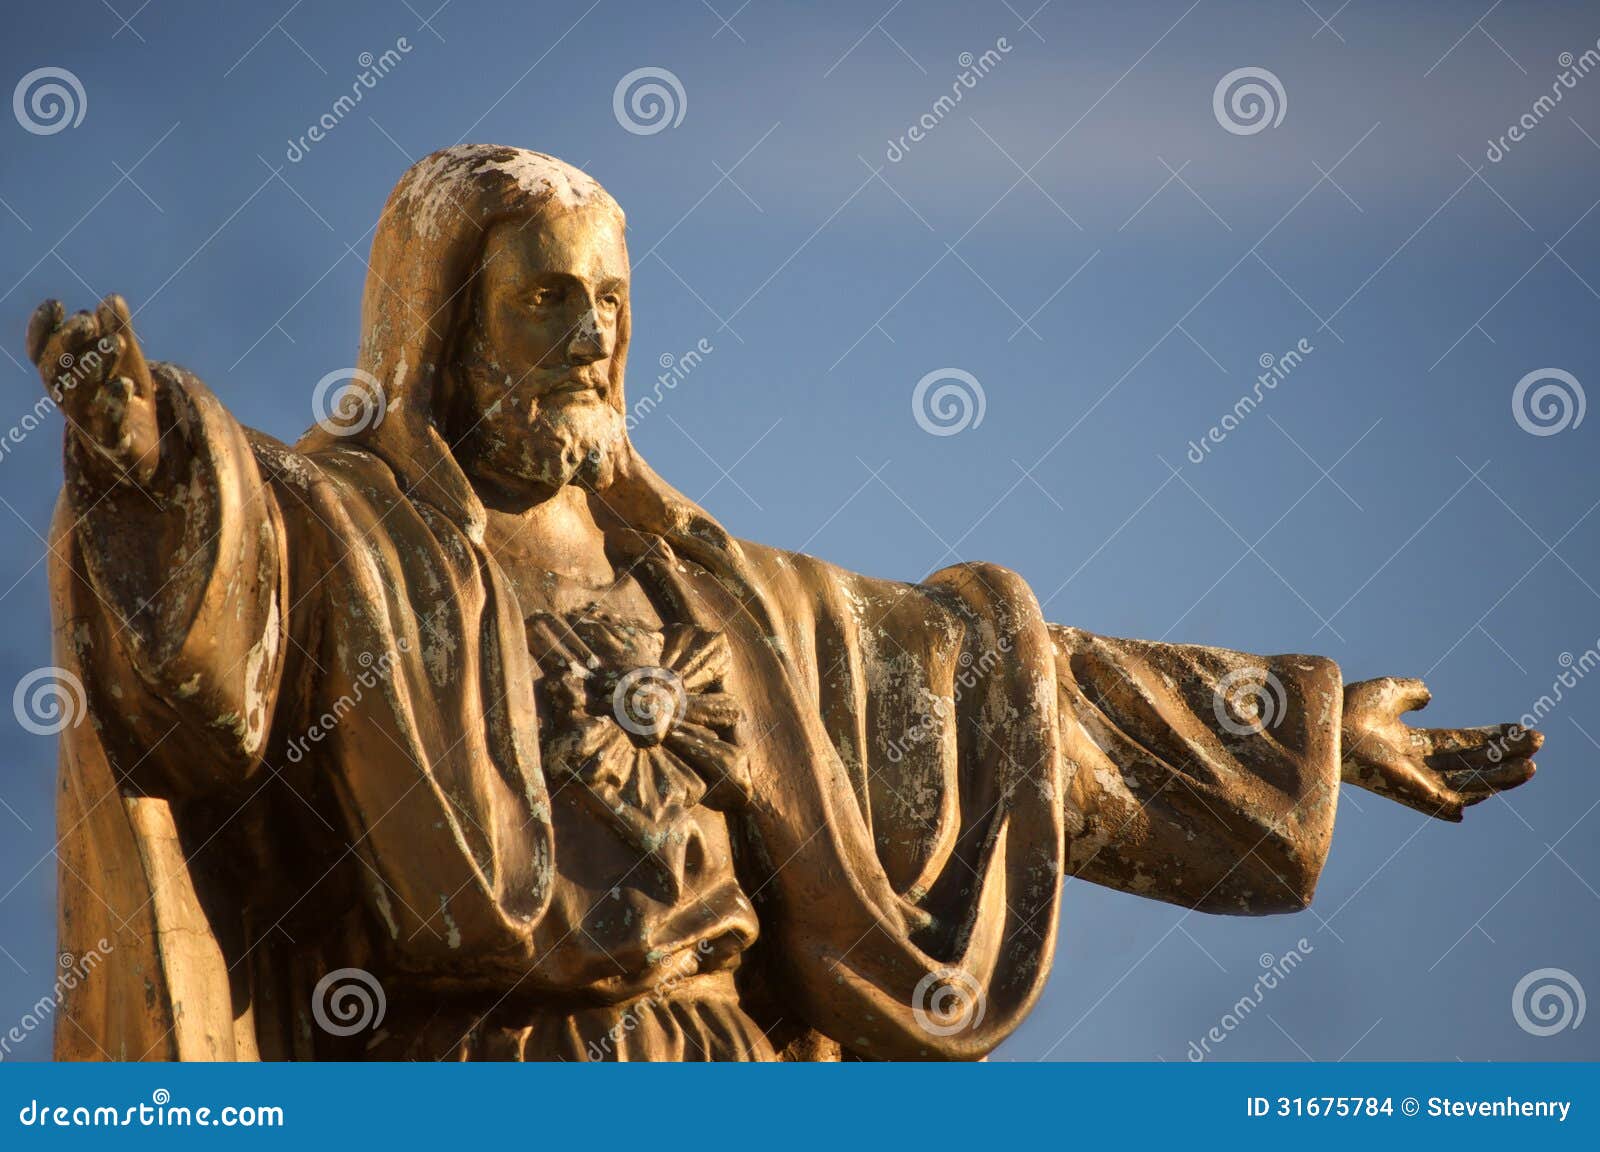 old, worn statue of jesus christ